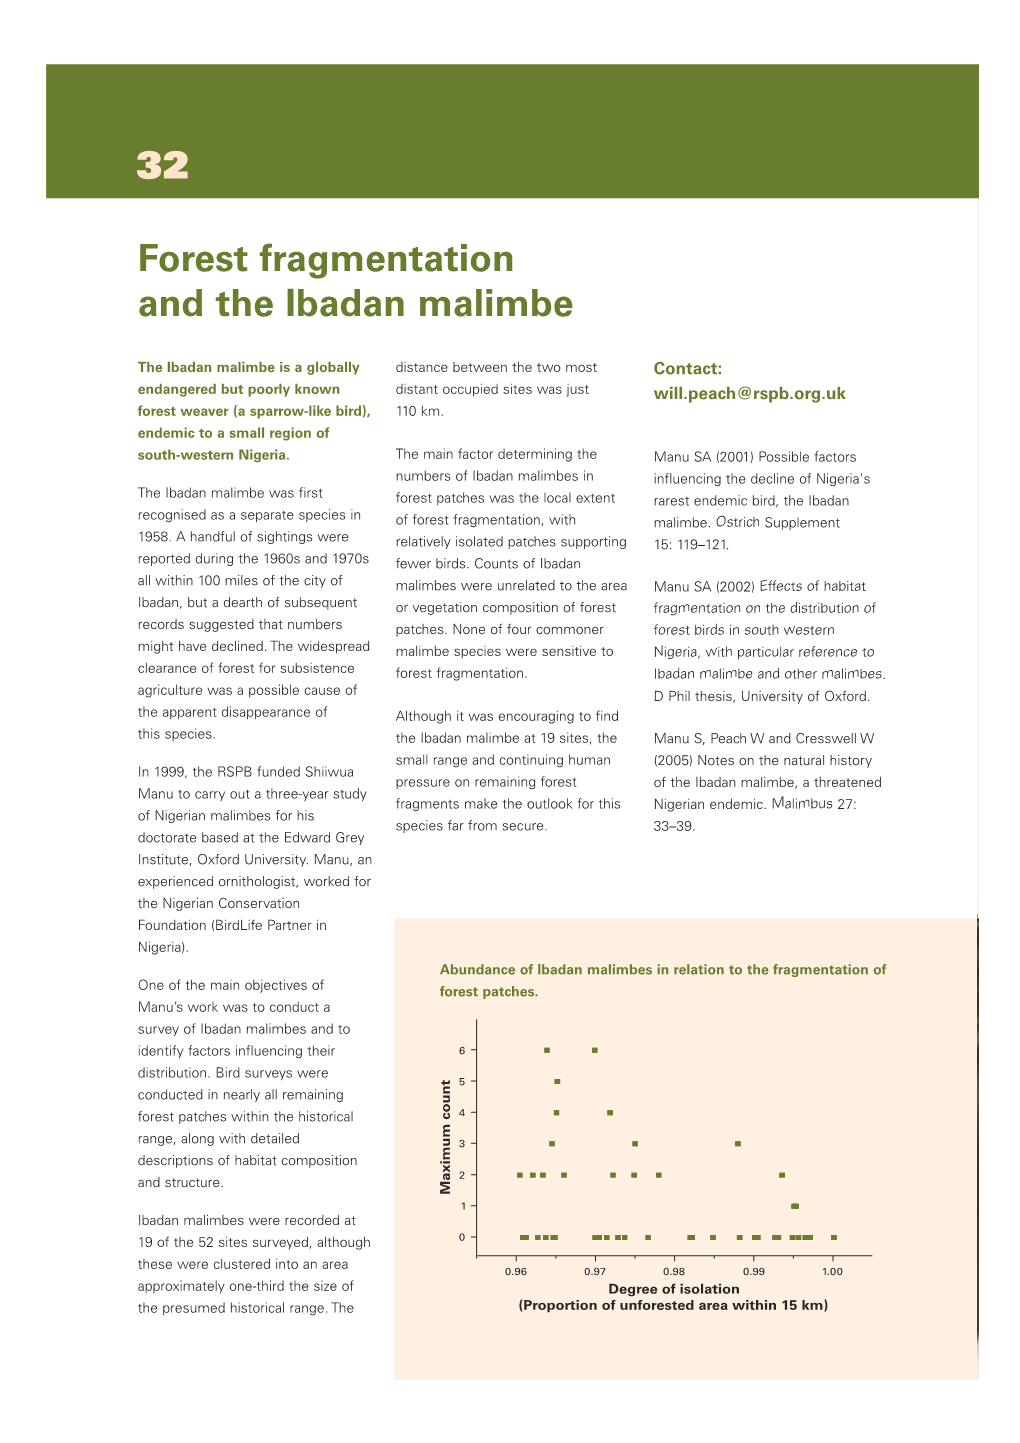 Forest Fragmentation and the Ibadan Malimbe 32